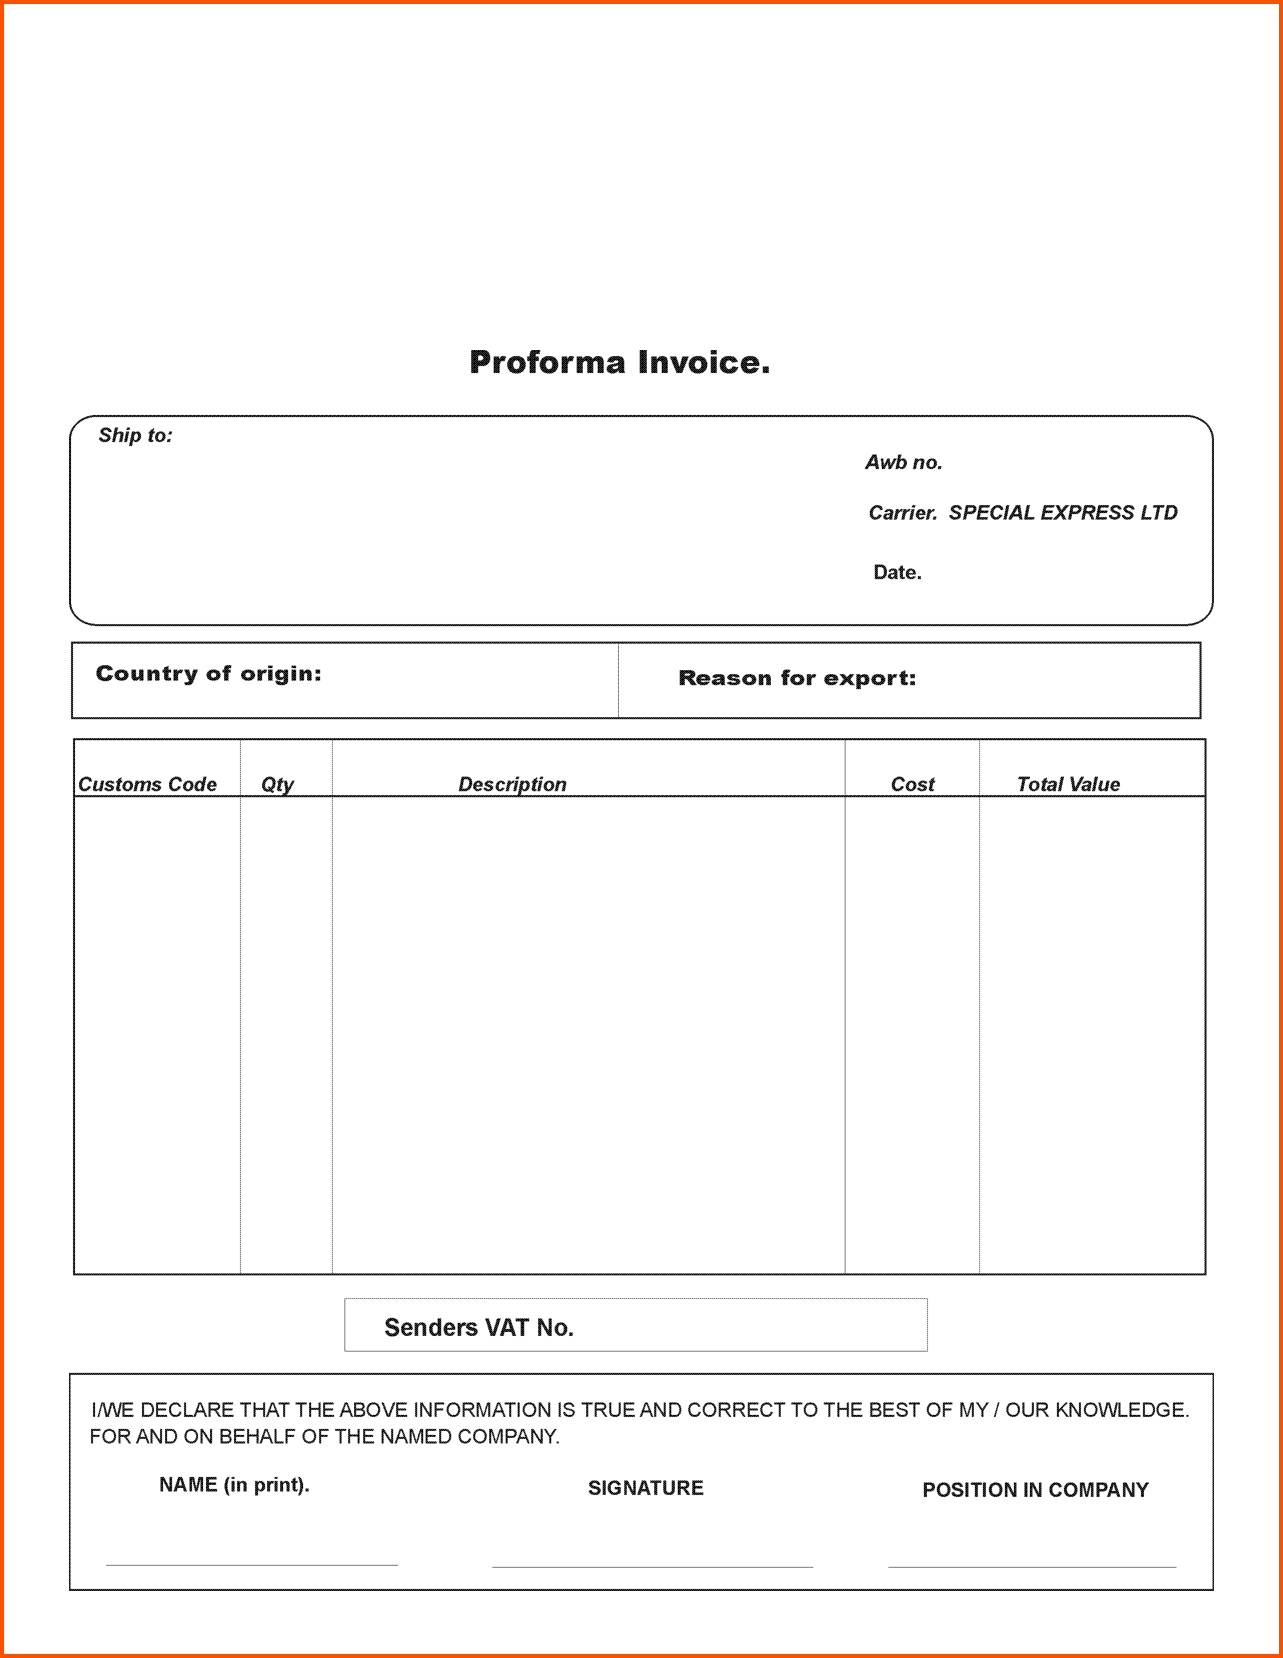 proforma invoice format for export define proforma invoice